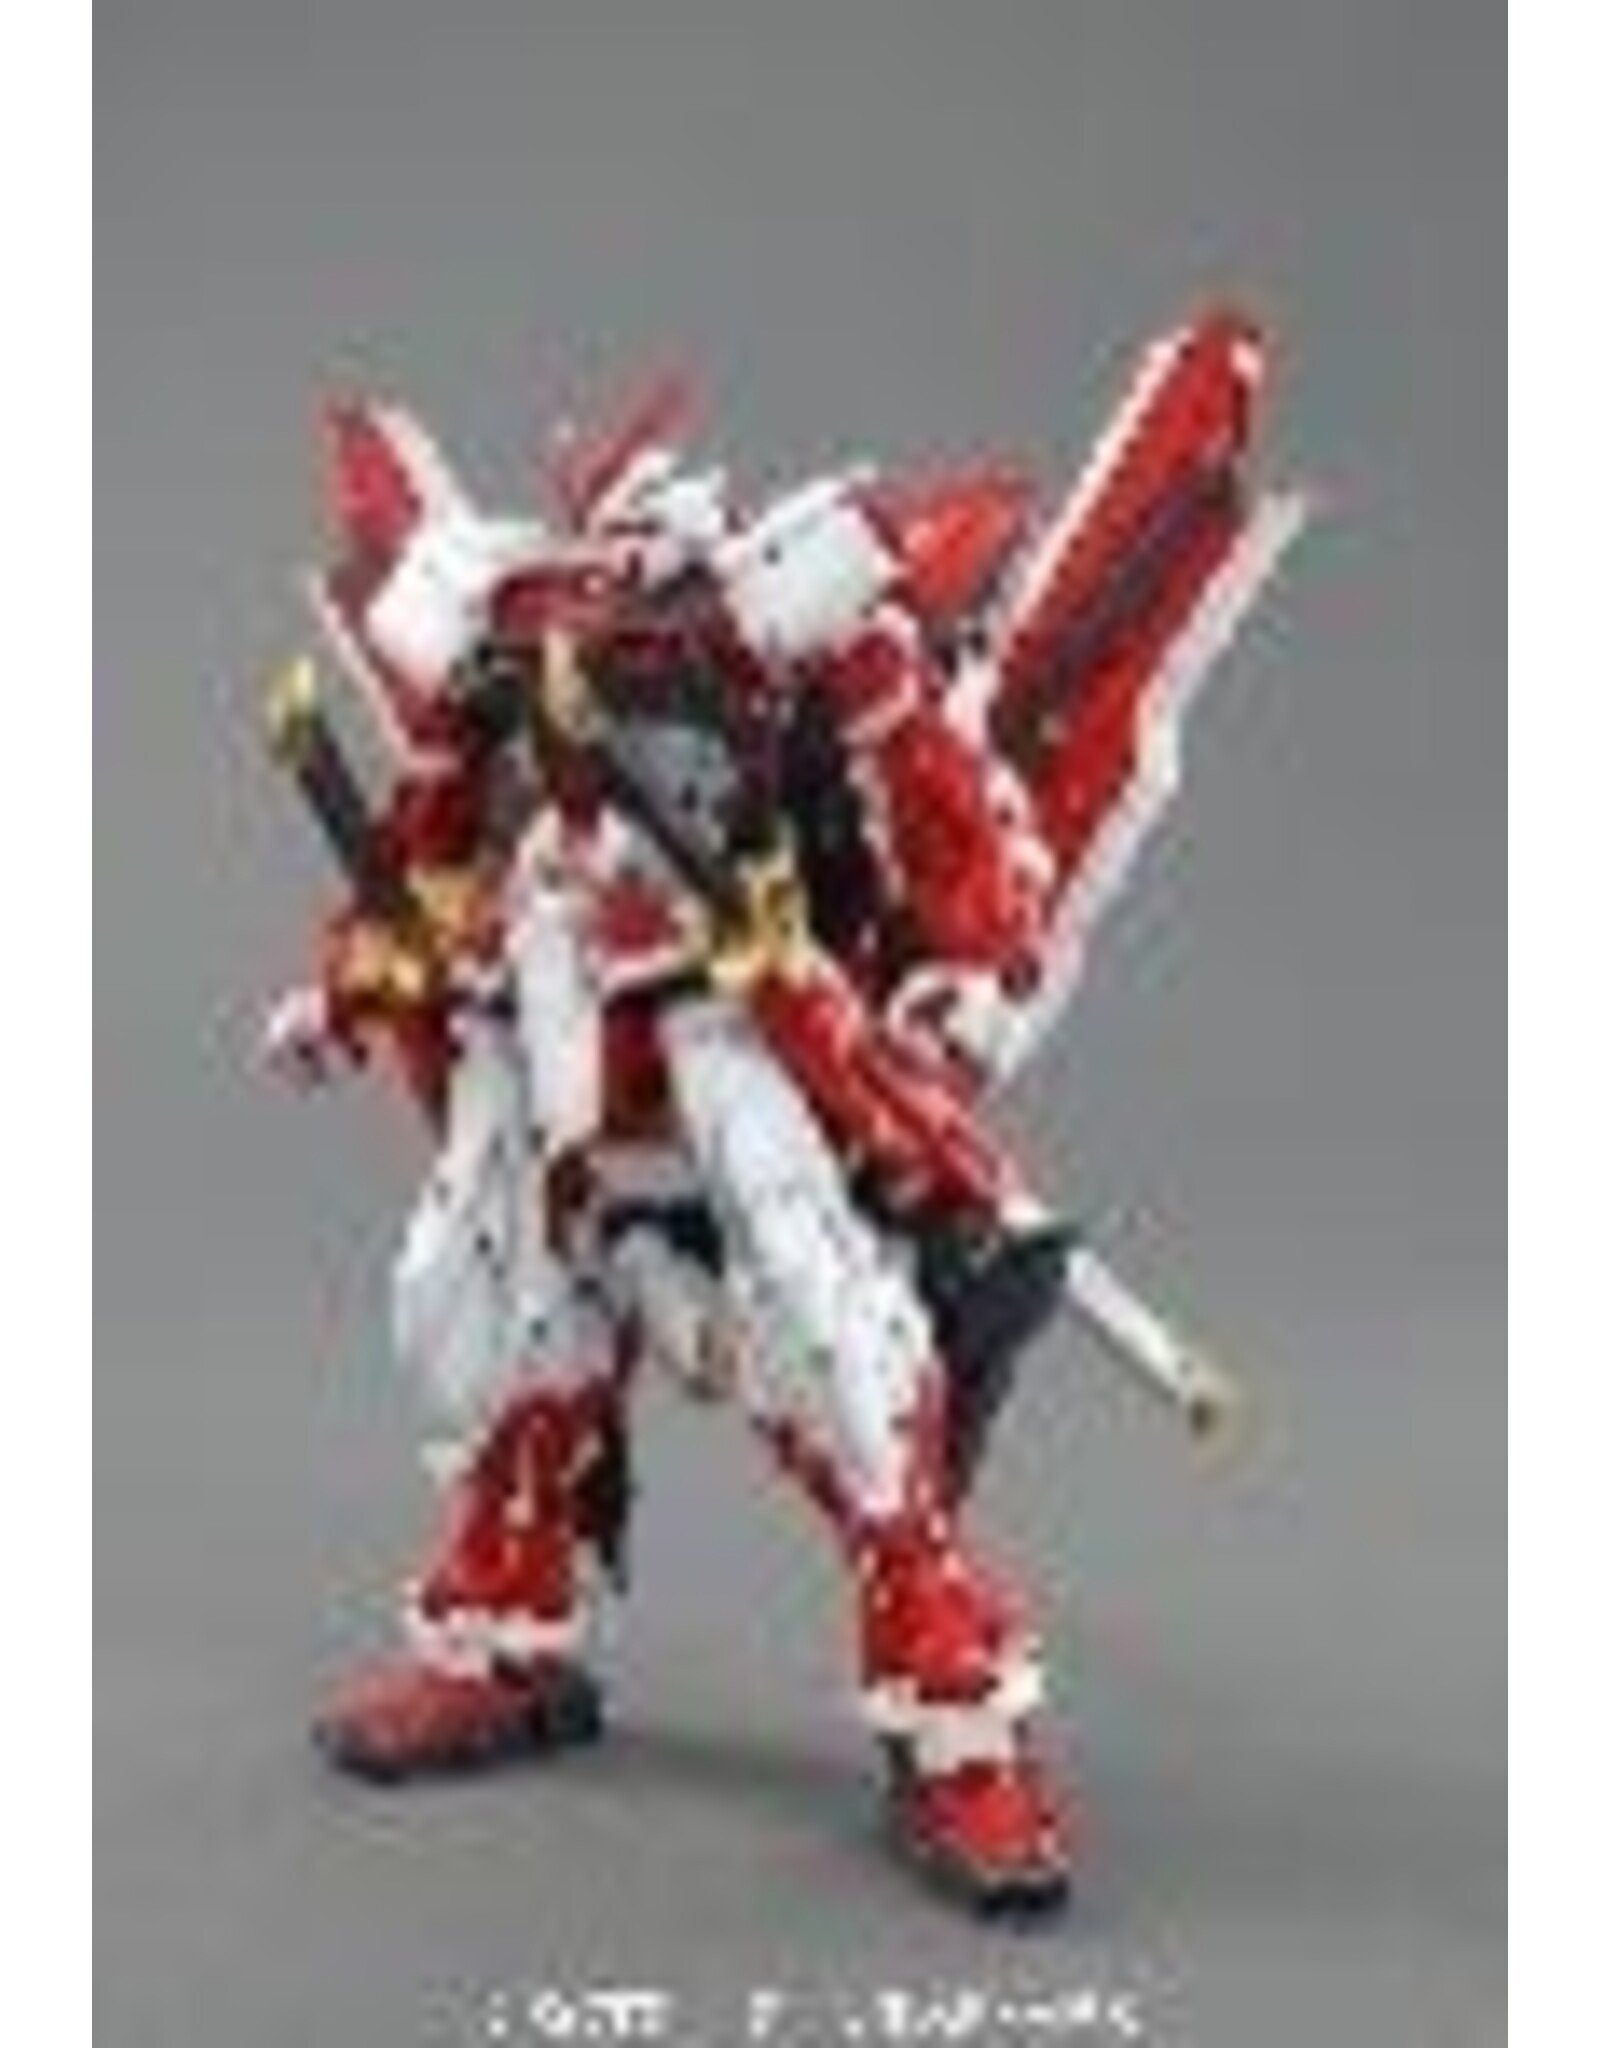 Bandai Bandai Hobby: MG 1/100 - Gundam SEED Astray Gundam Astray Red Frame Custom